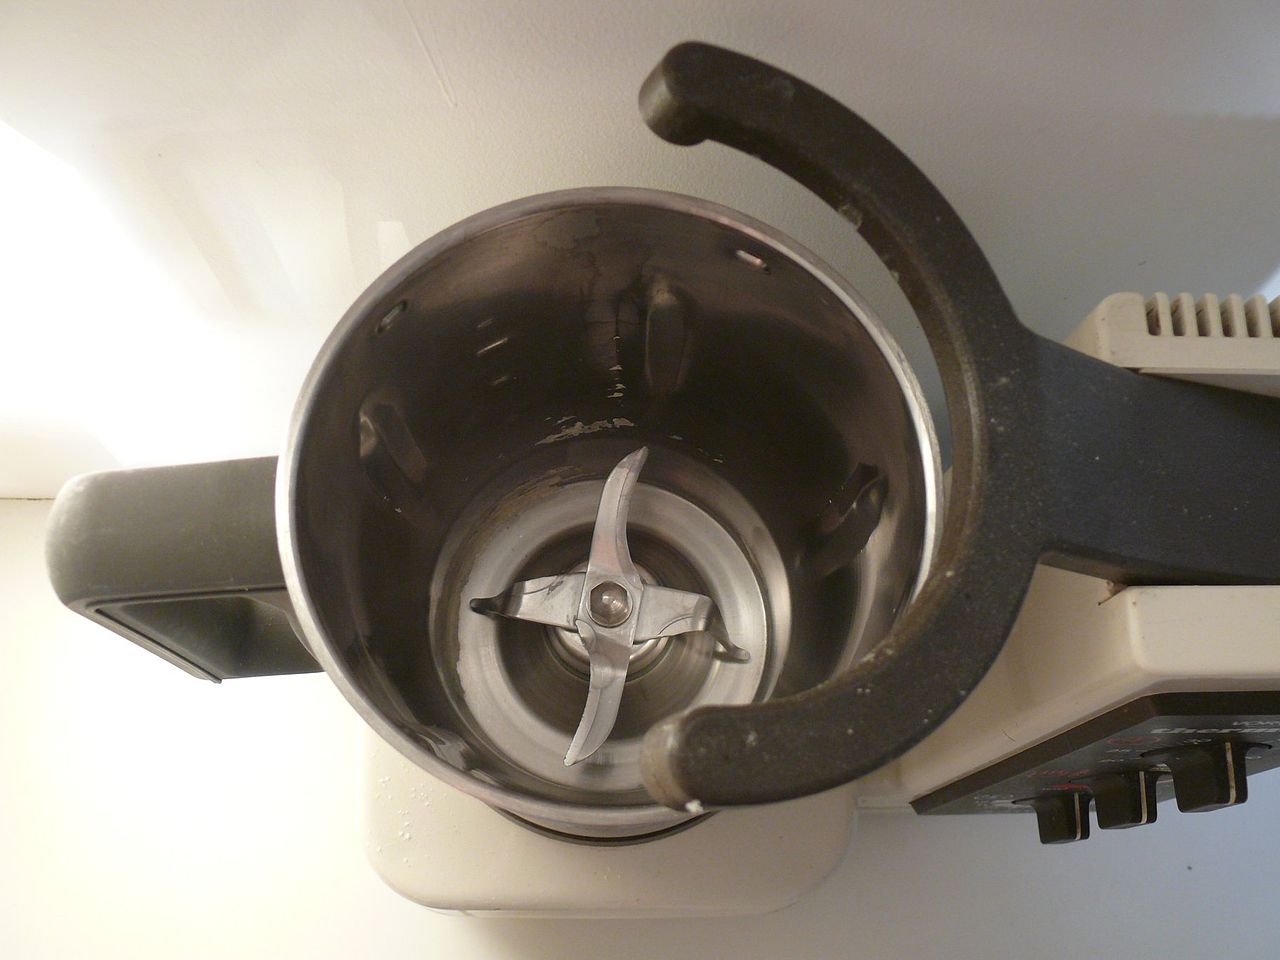 File:Vorwerk - Thermomix - TM31 - 4.jpg - Wikimedia Commons